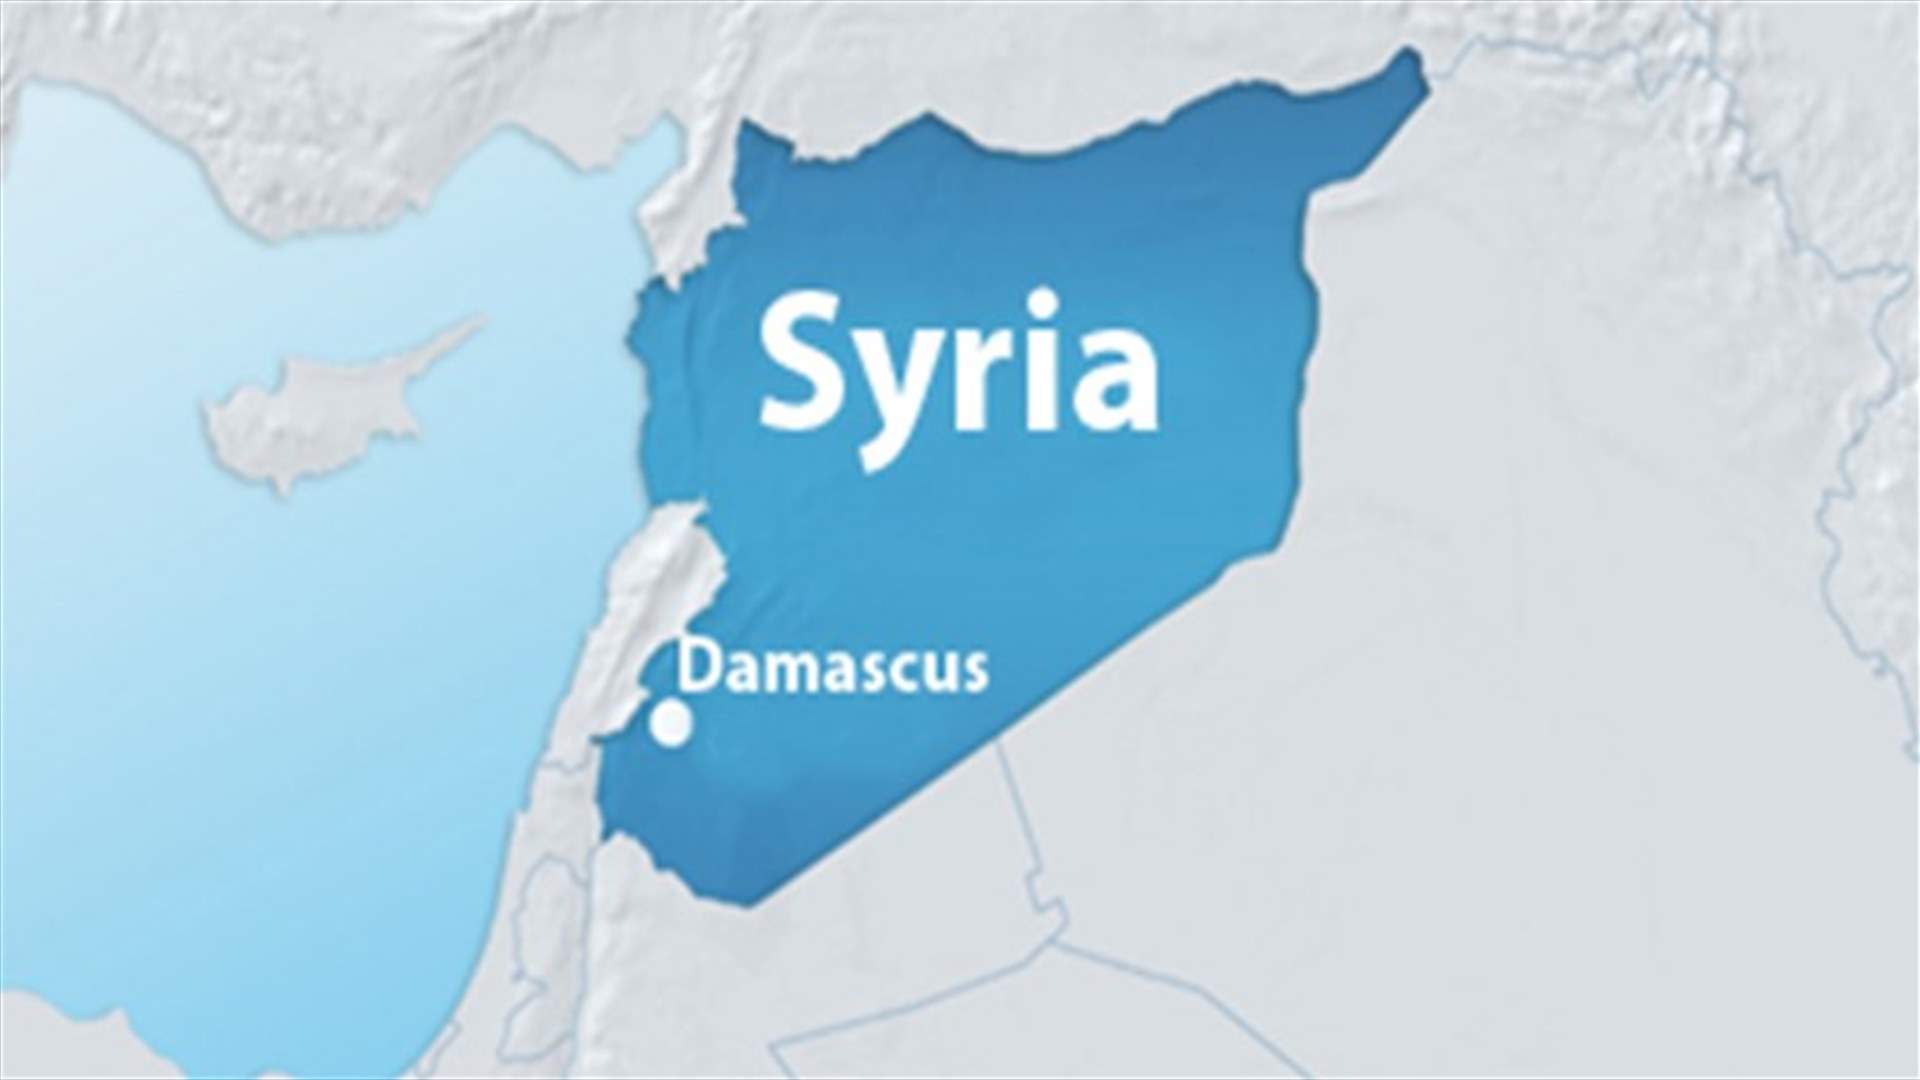 Jets hit rebel-held Syrian city of Idlib, kill at least 25 -witnesses